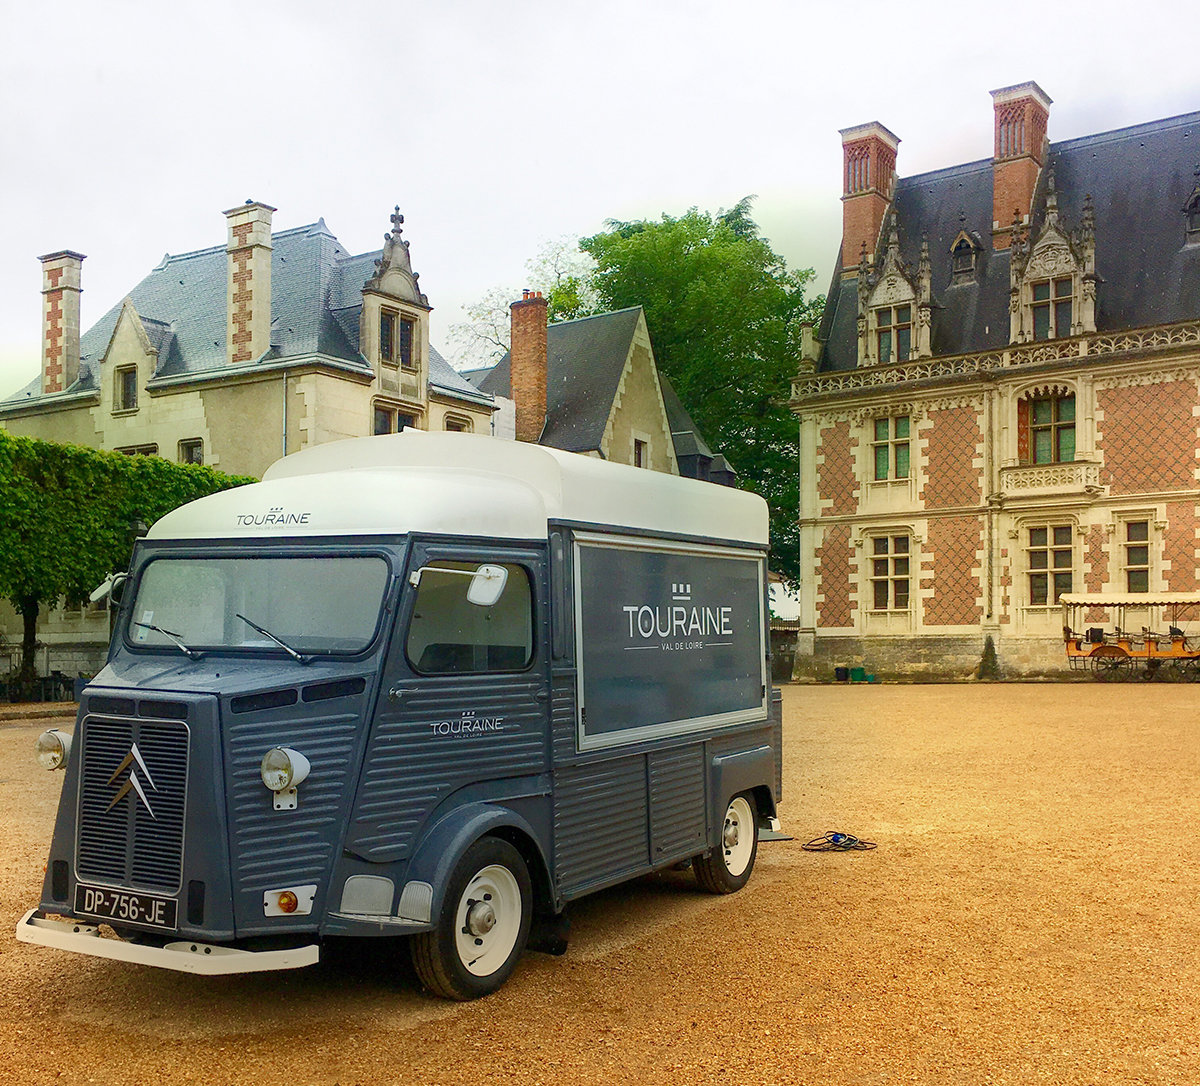 The “touraine wine truck” meets the public